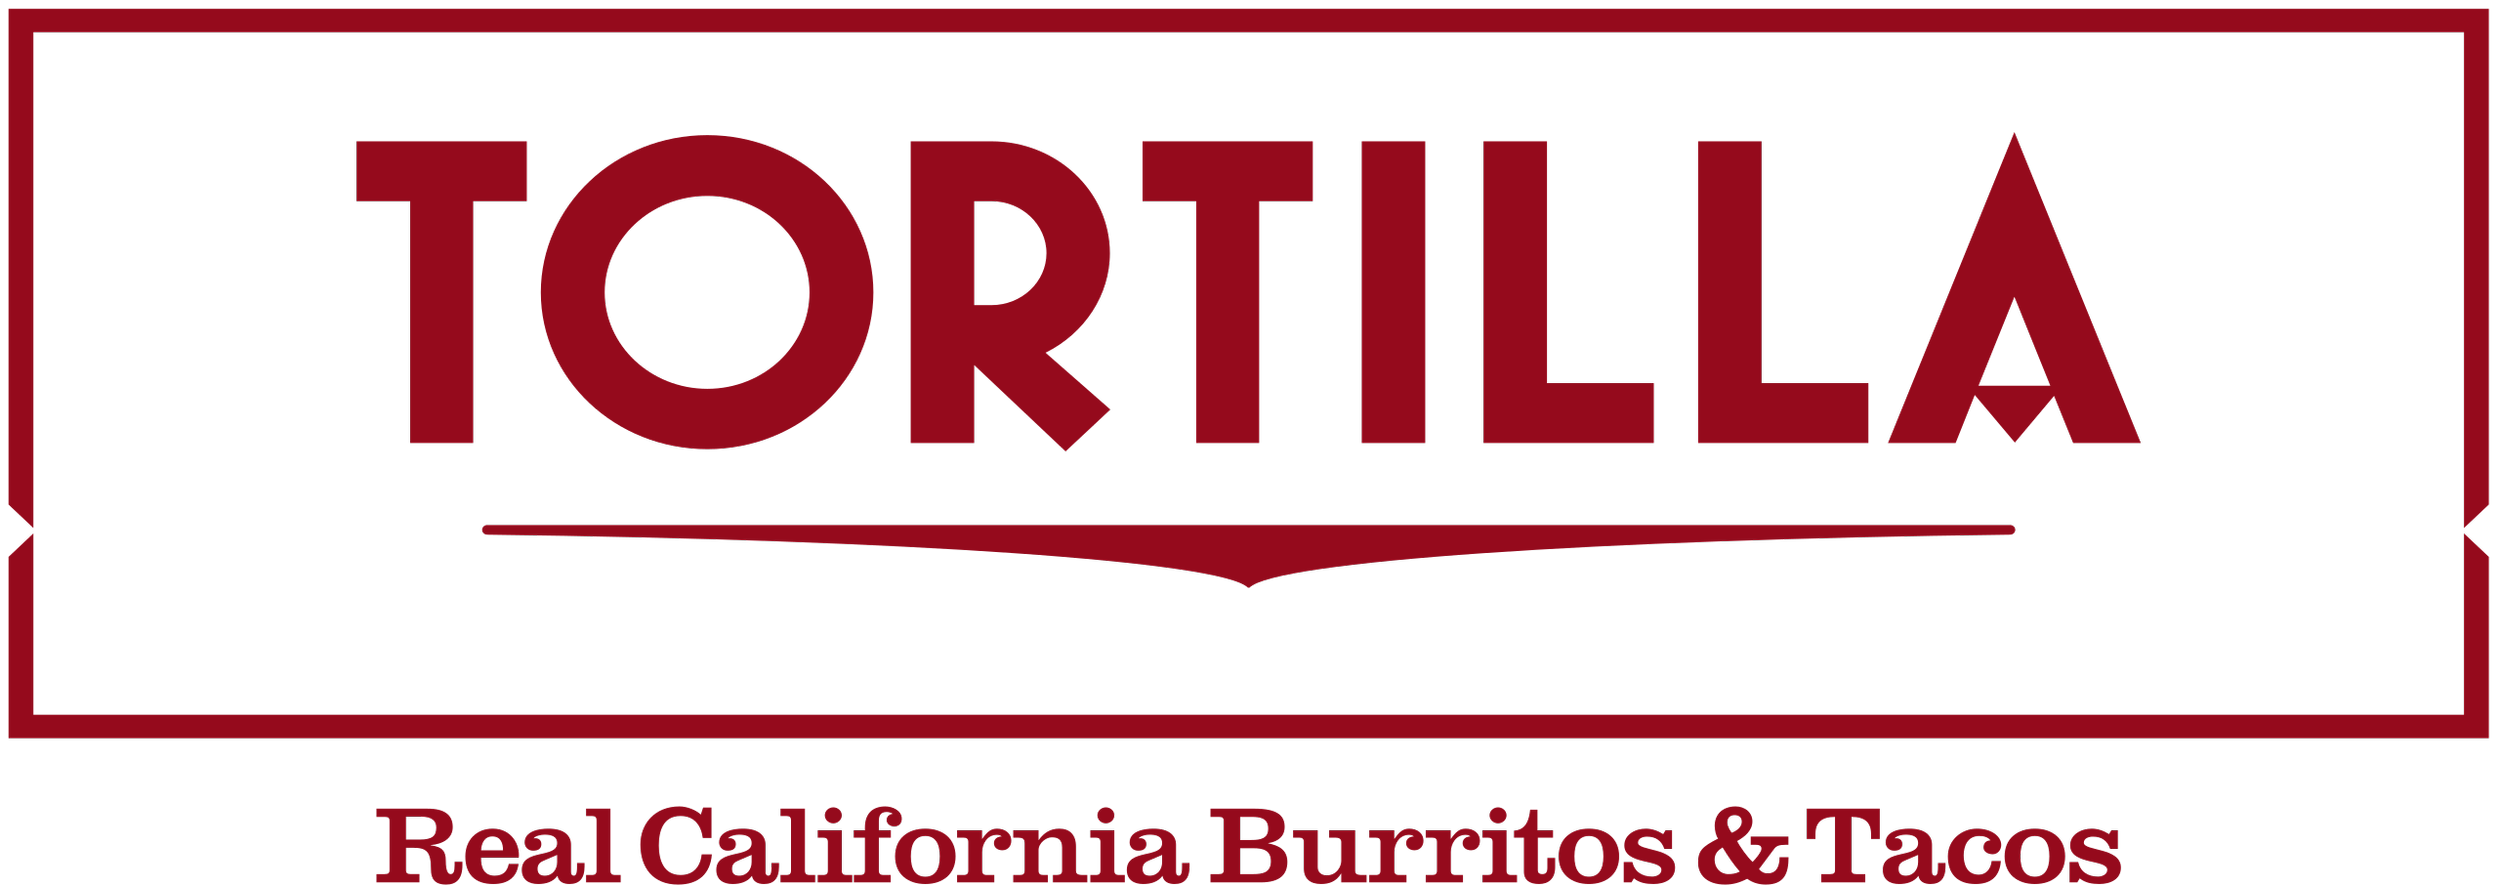 2560px-Tortilla_logo.png